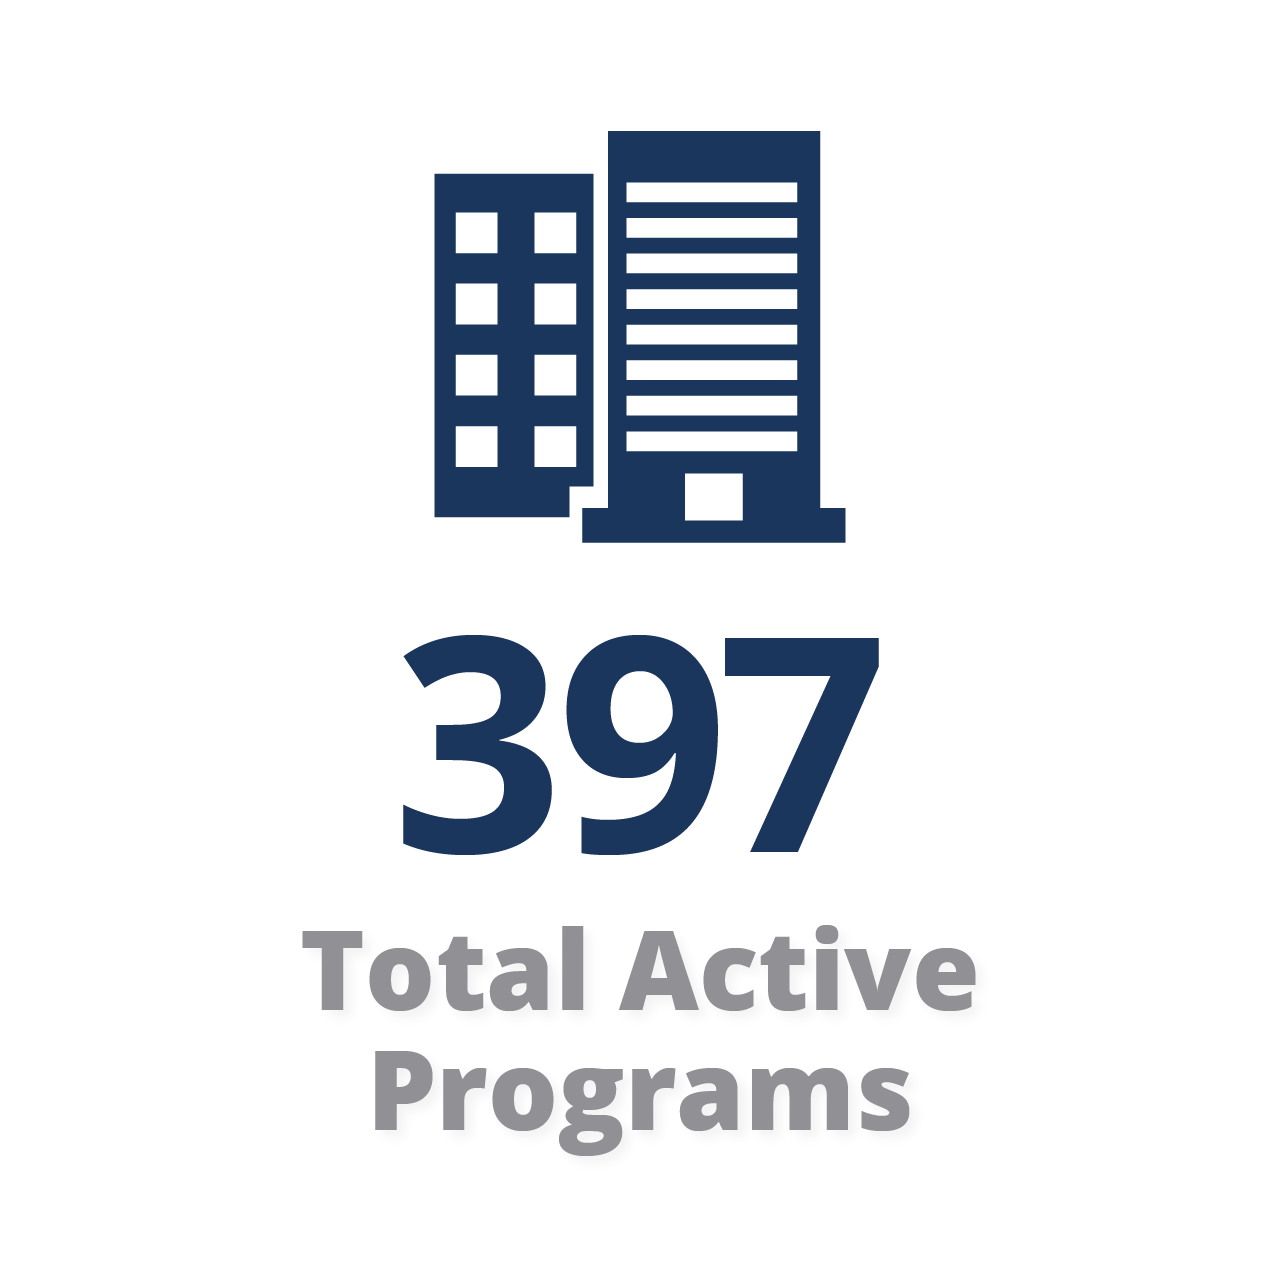 407 Total Active Programs